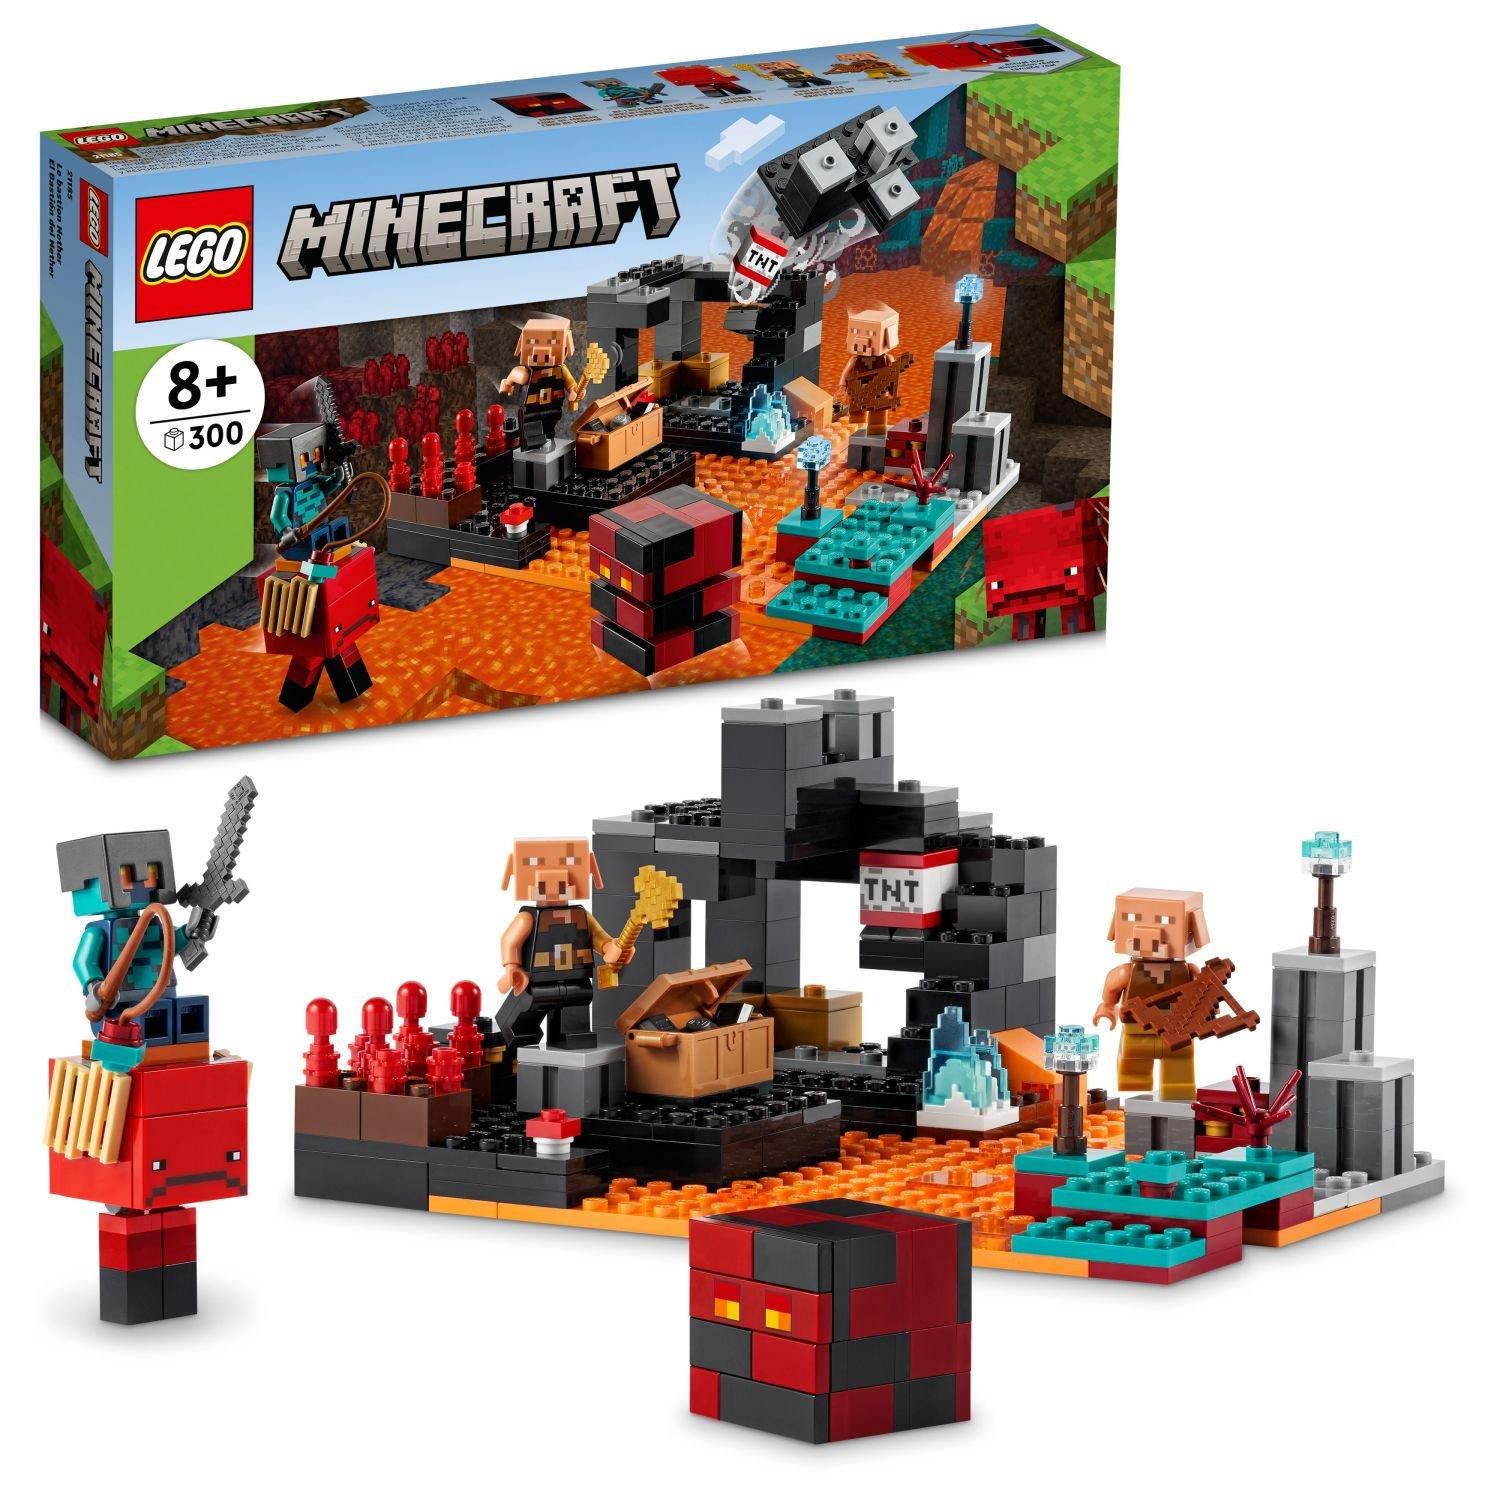 LEGO Minecraft The Nether Bastion 21185 Building Kit